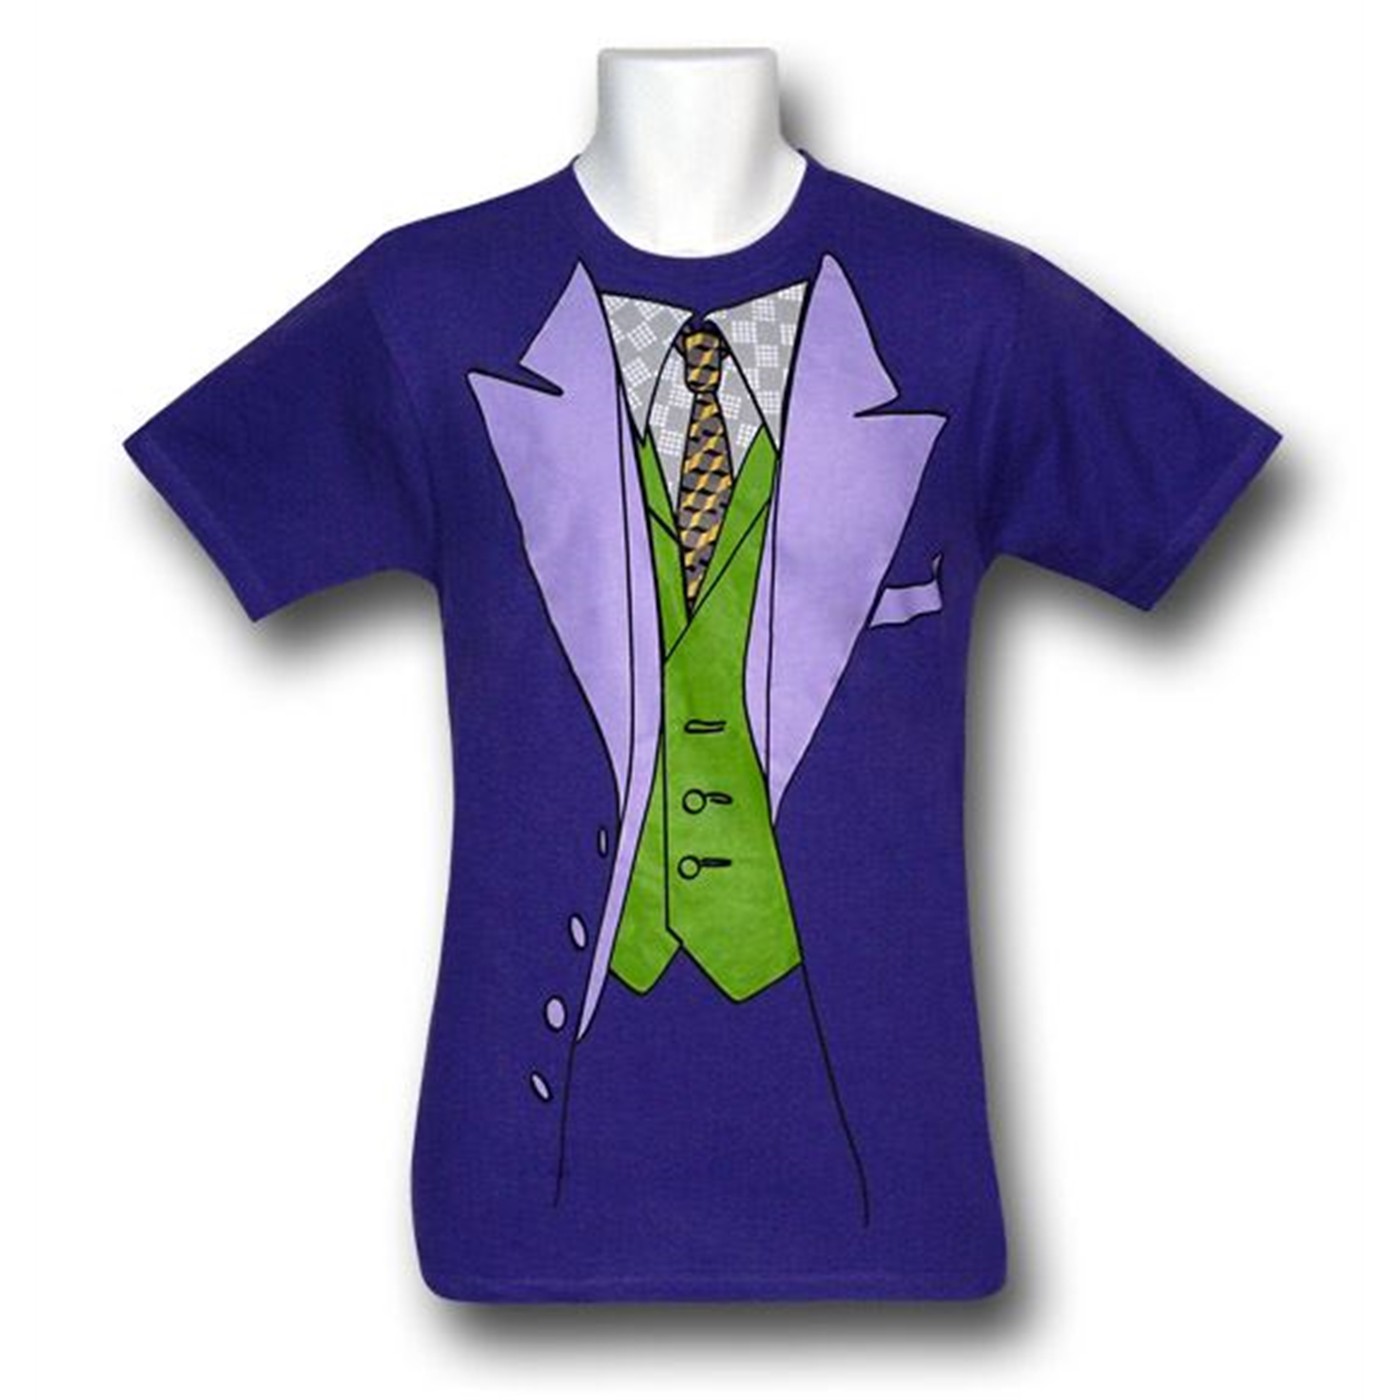 Joker Costume T-Shirt